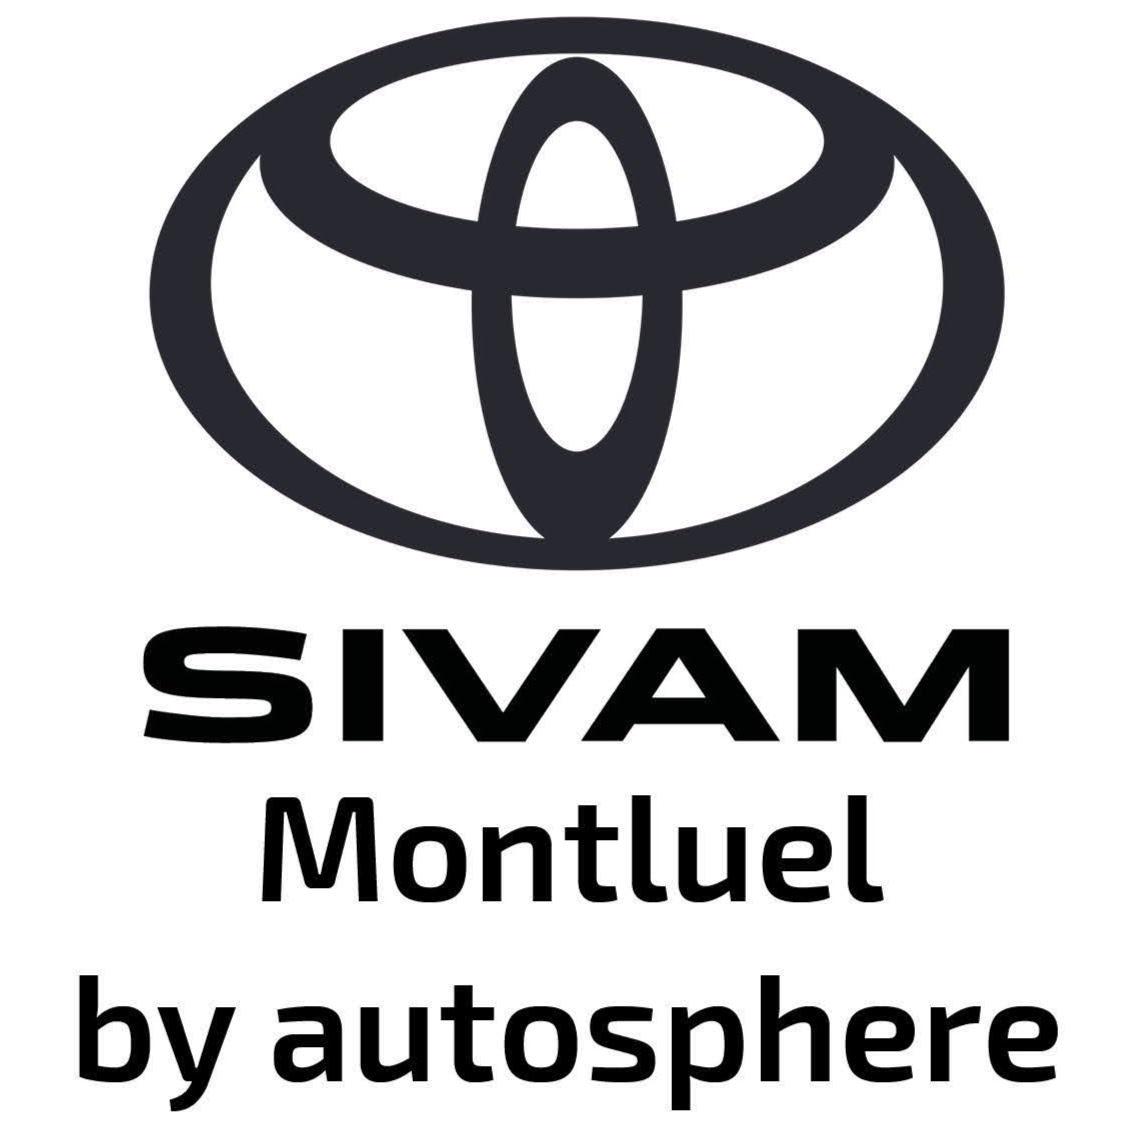 Toyota - Montluel Automobiles - Montluel Montluel